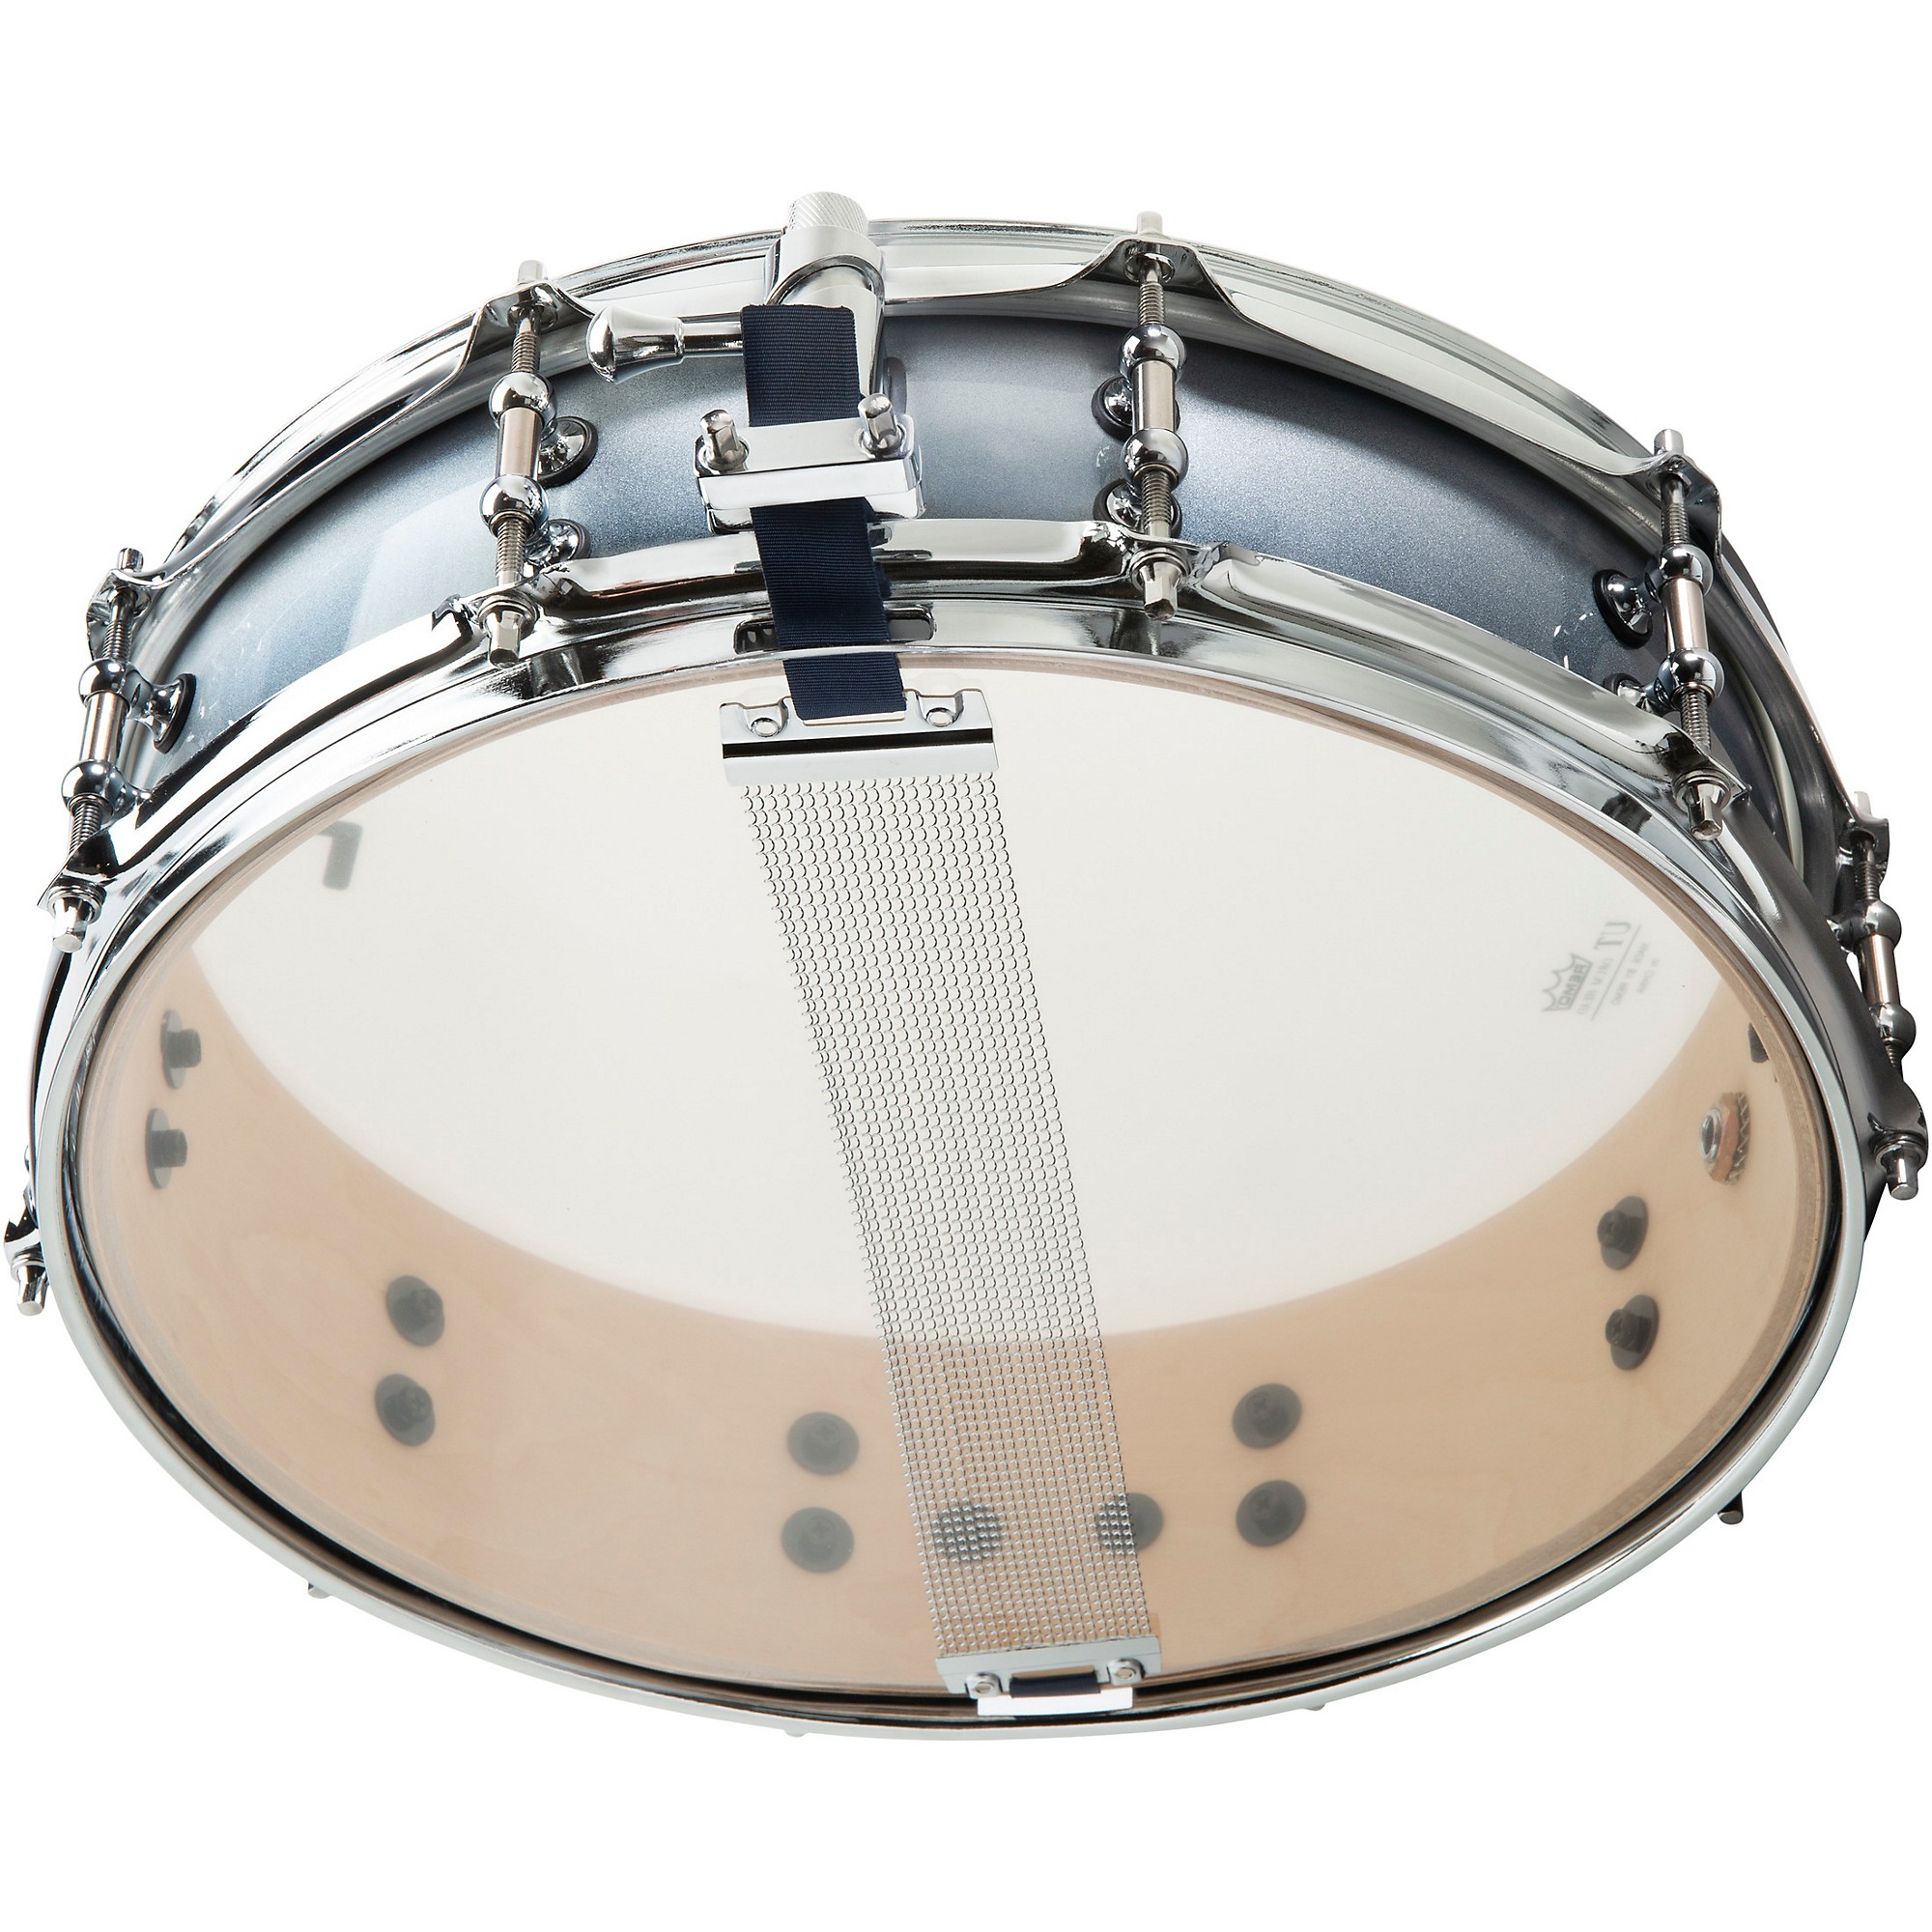 Sound Percussion Labs 468 Series Snare Drum 14 x 4 in. Silver Tone Fade